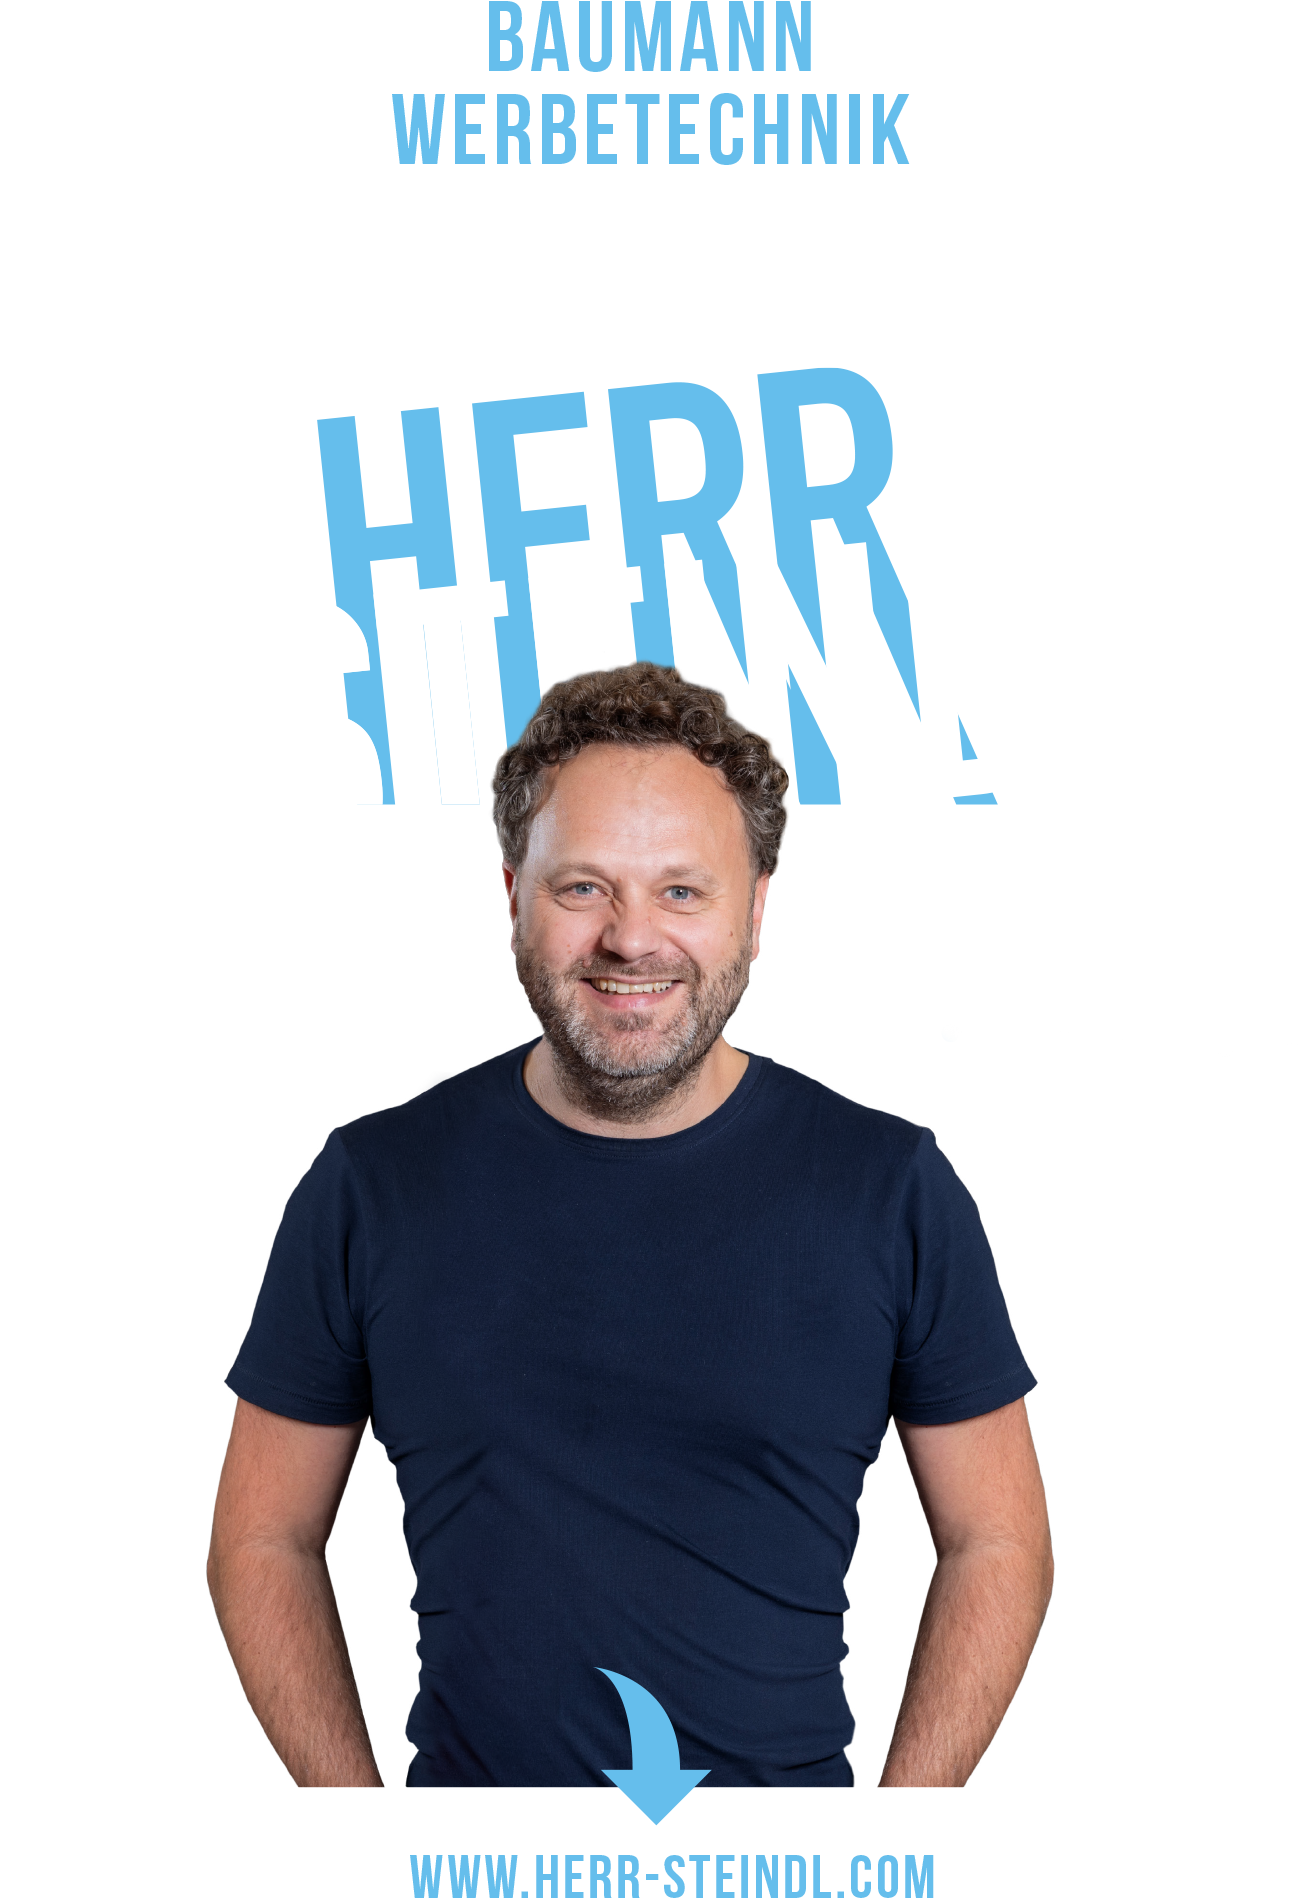 Herr Steindl